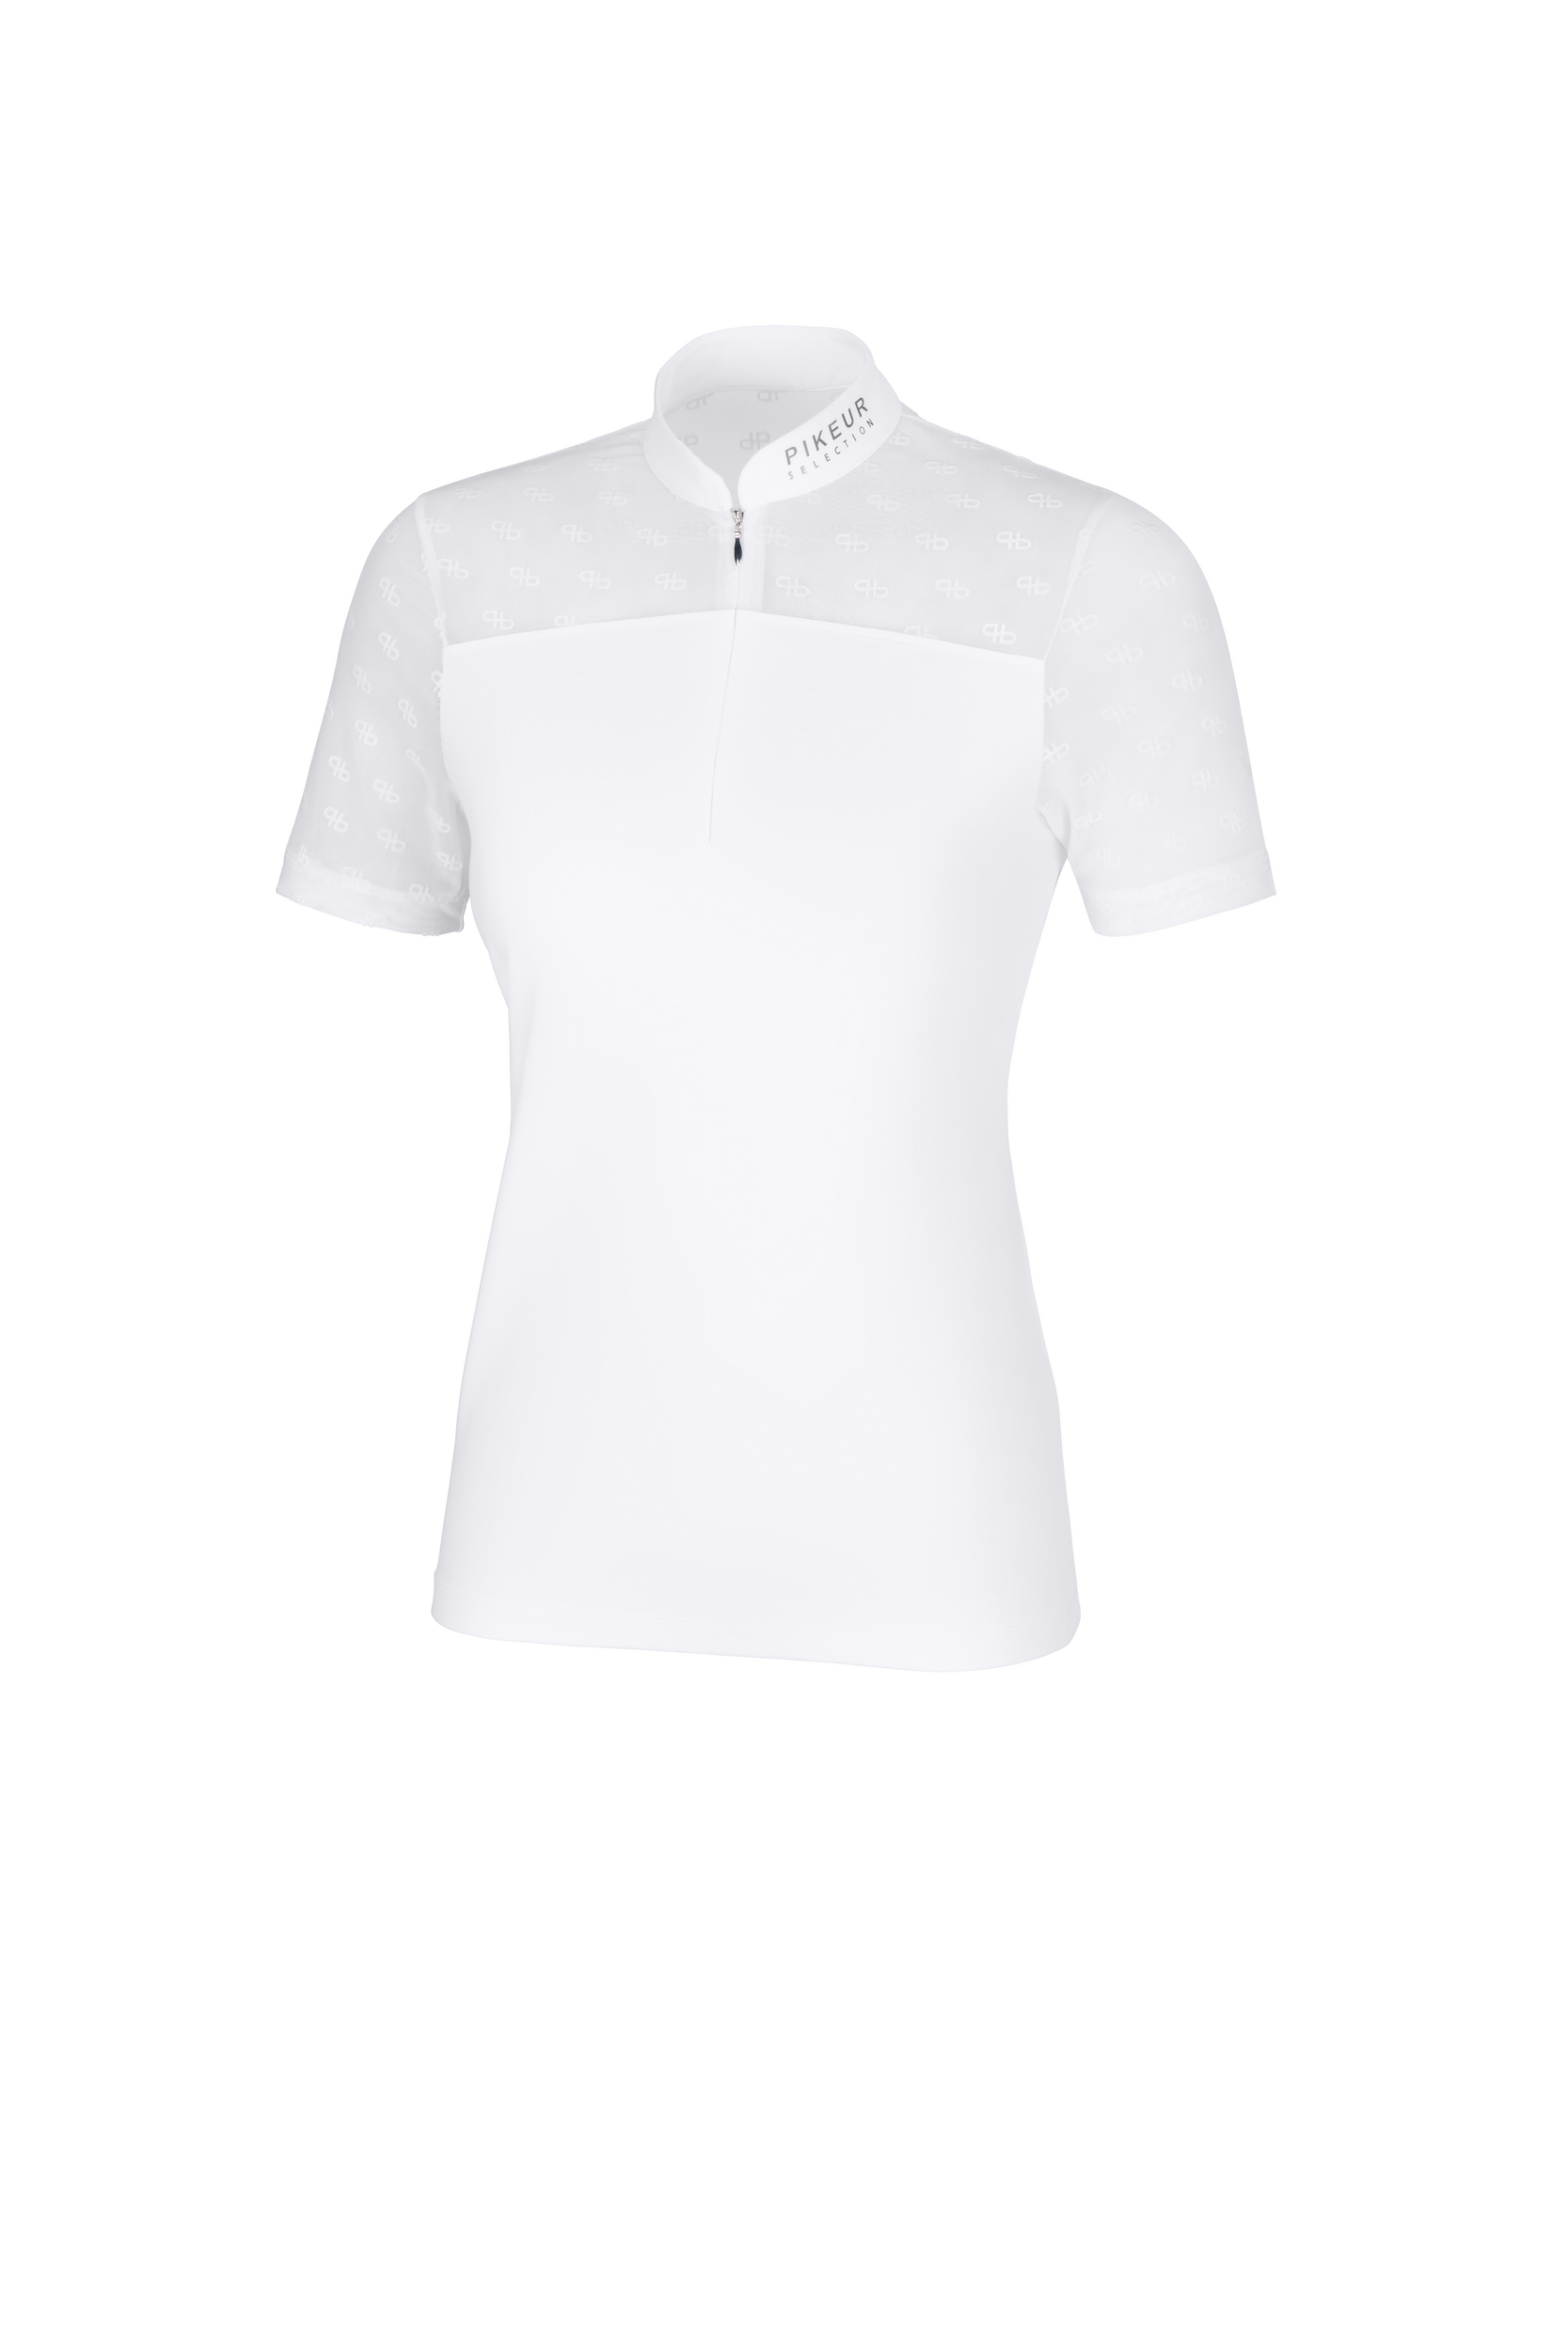 PIKEUR Damen Trainings Zip Shirt Kurzarm Selection FS24 - white - 34 - 2